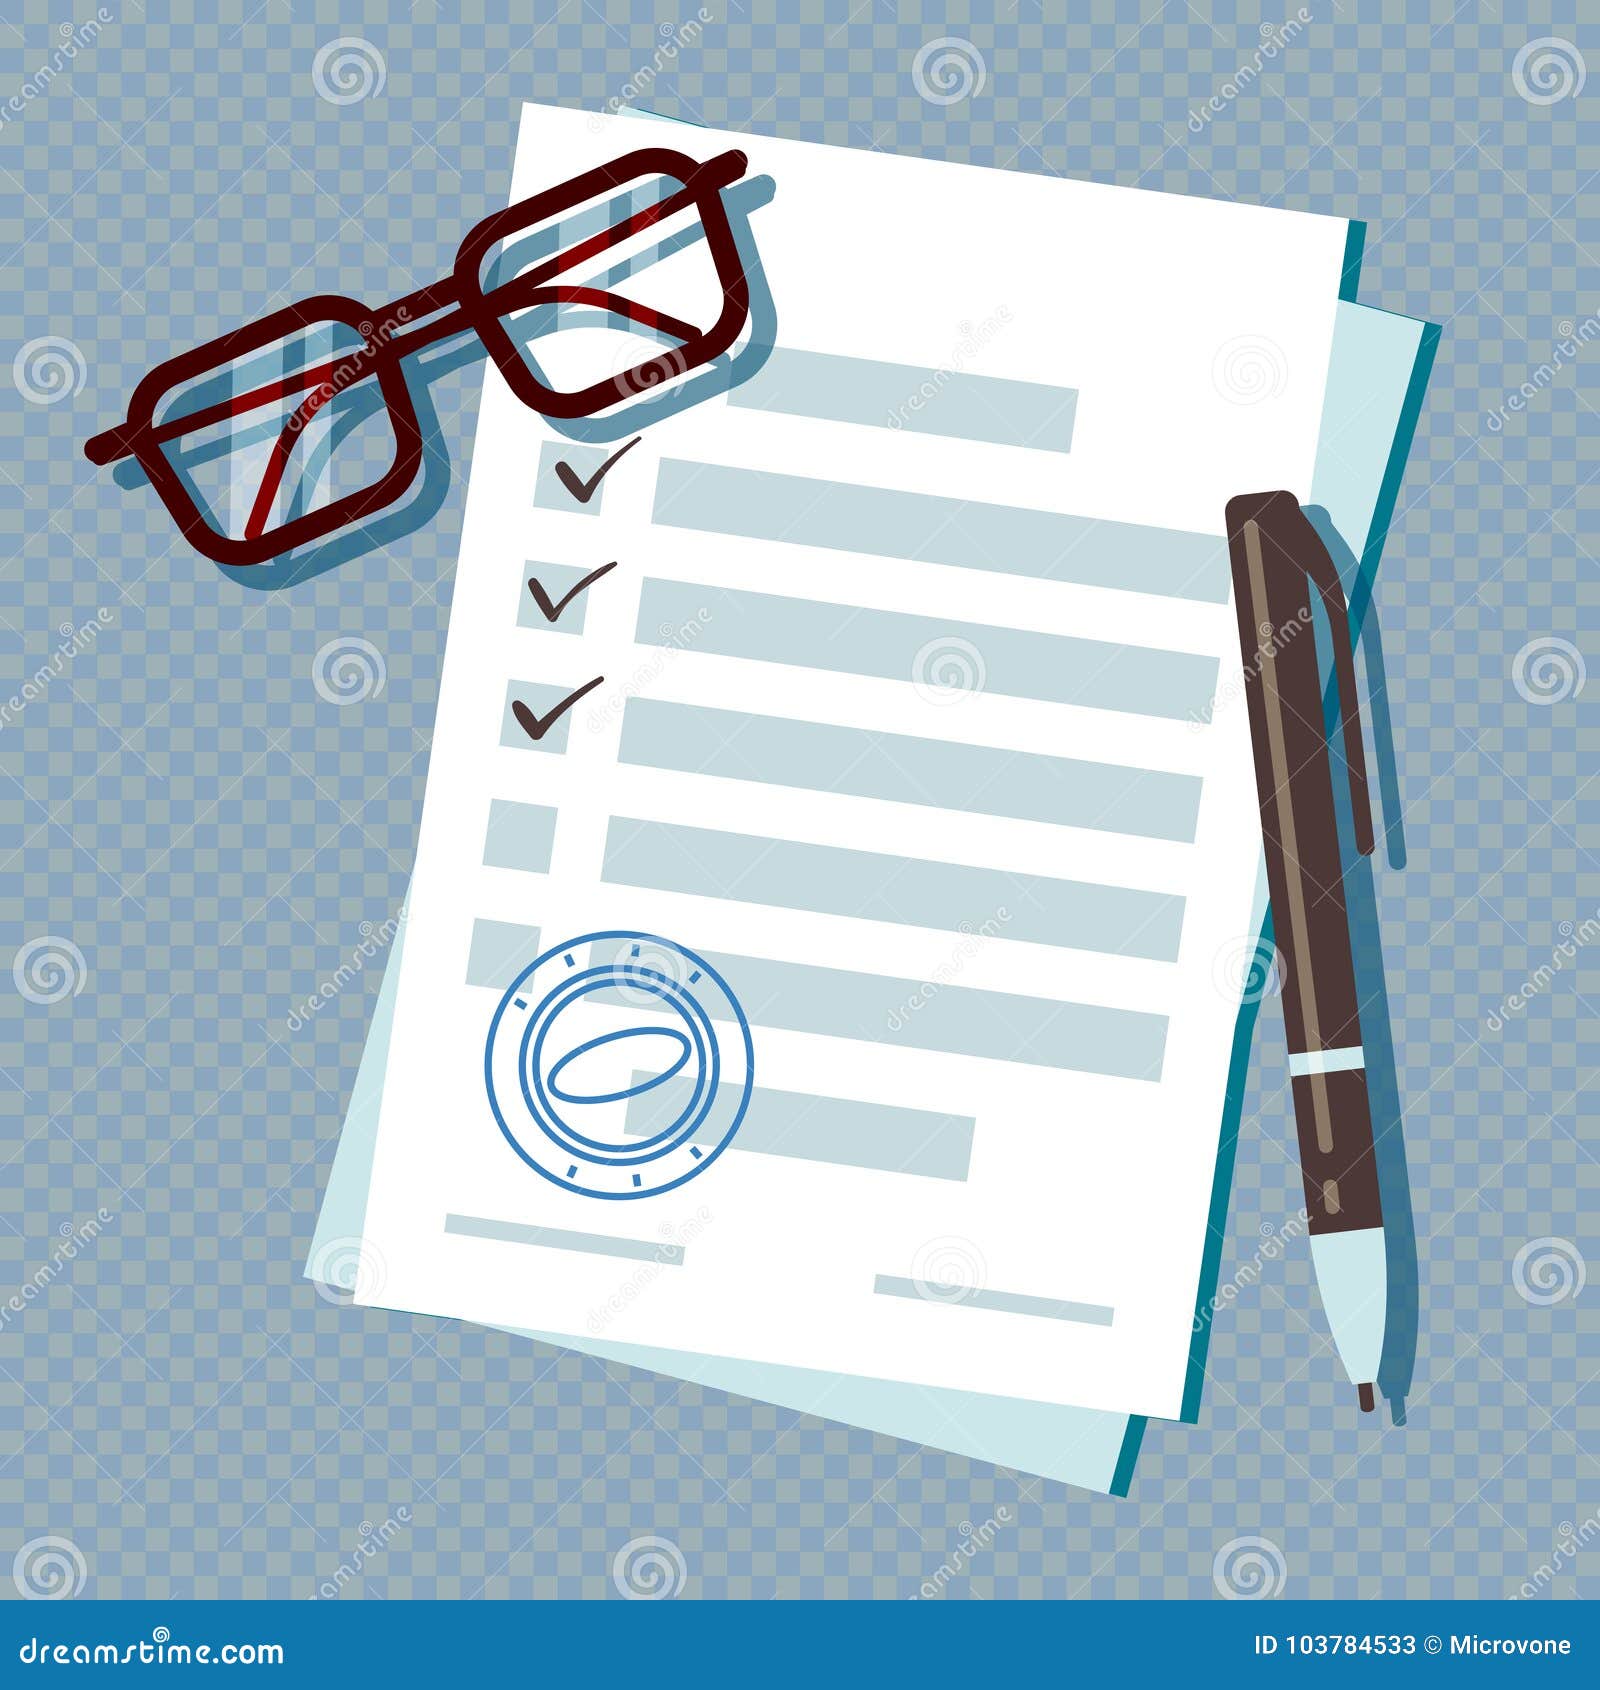 loan application form document  on transparent background